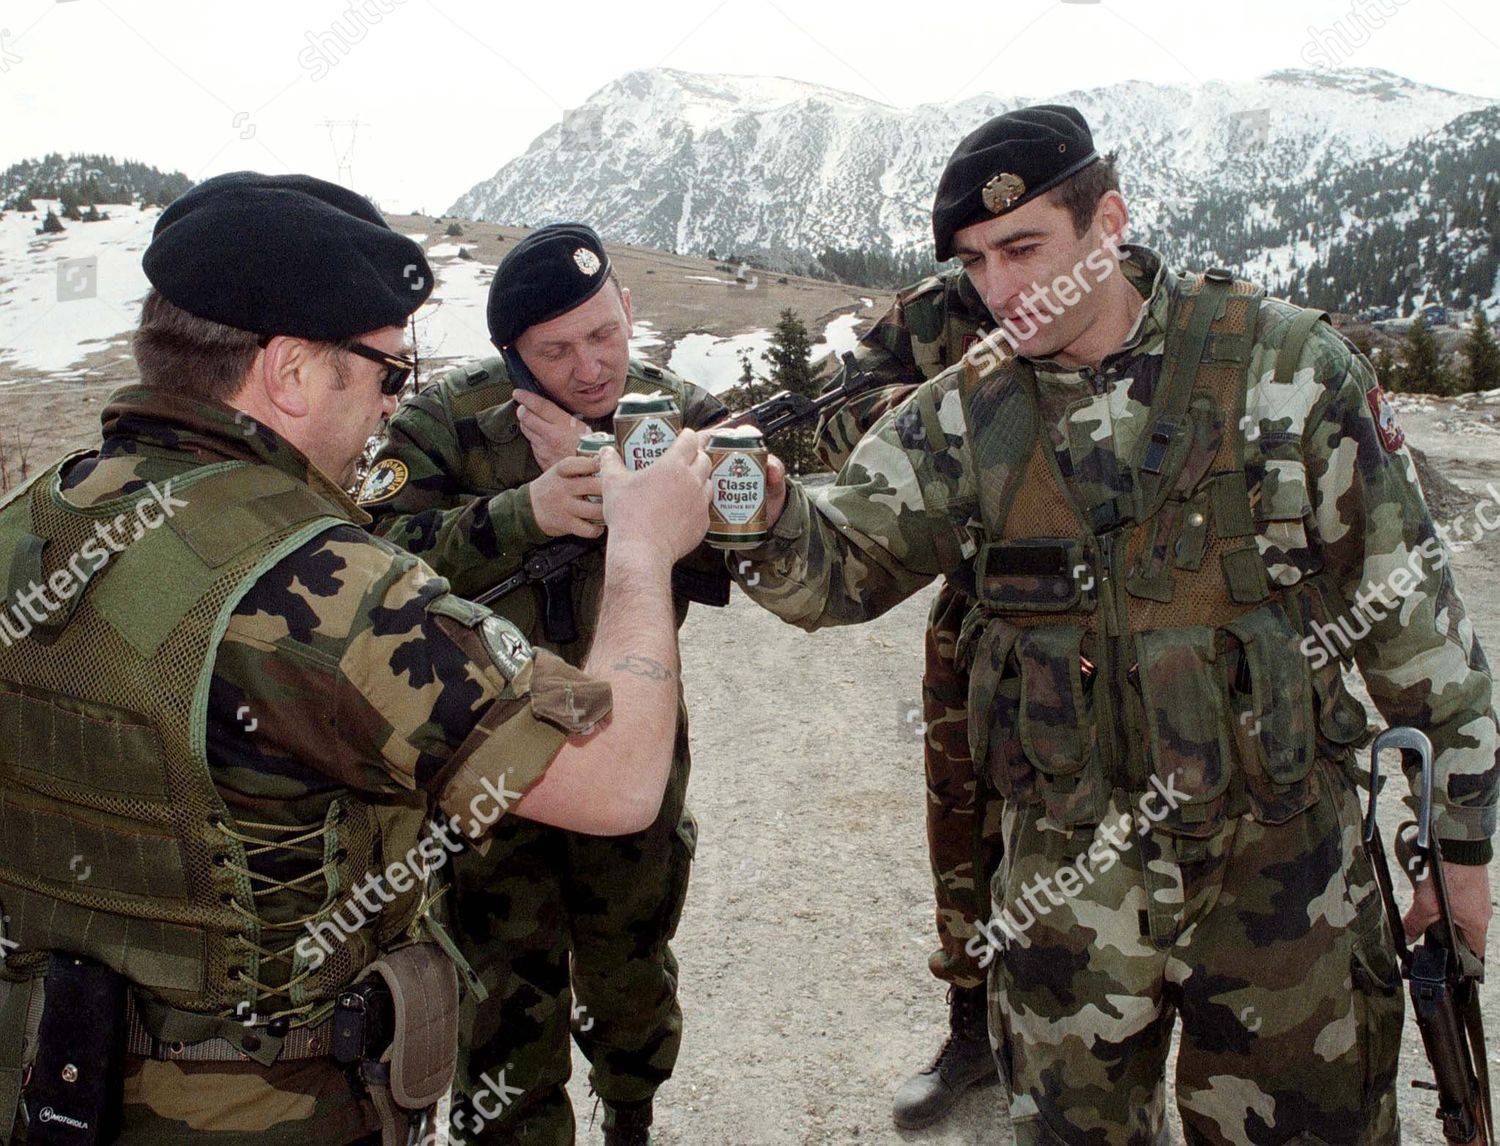 yugoslavia-kosovo-troops-enter-mar-2001-shutterstock-editorial-7705488a.jpg